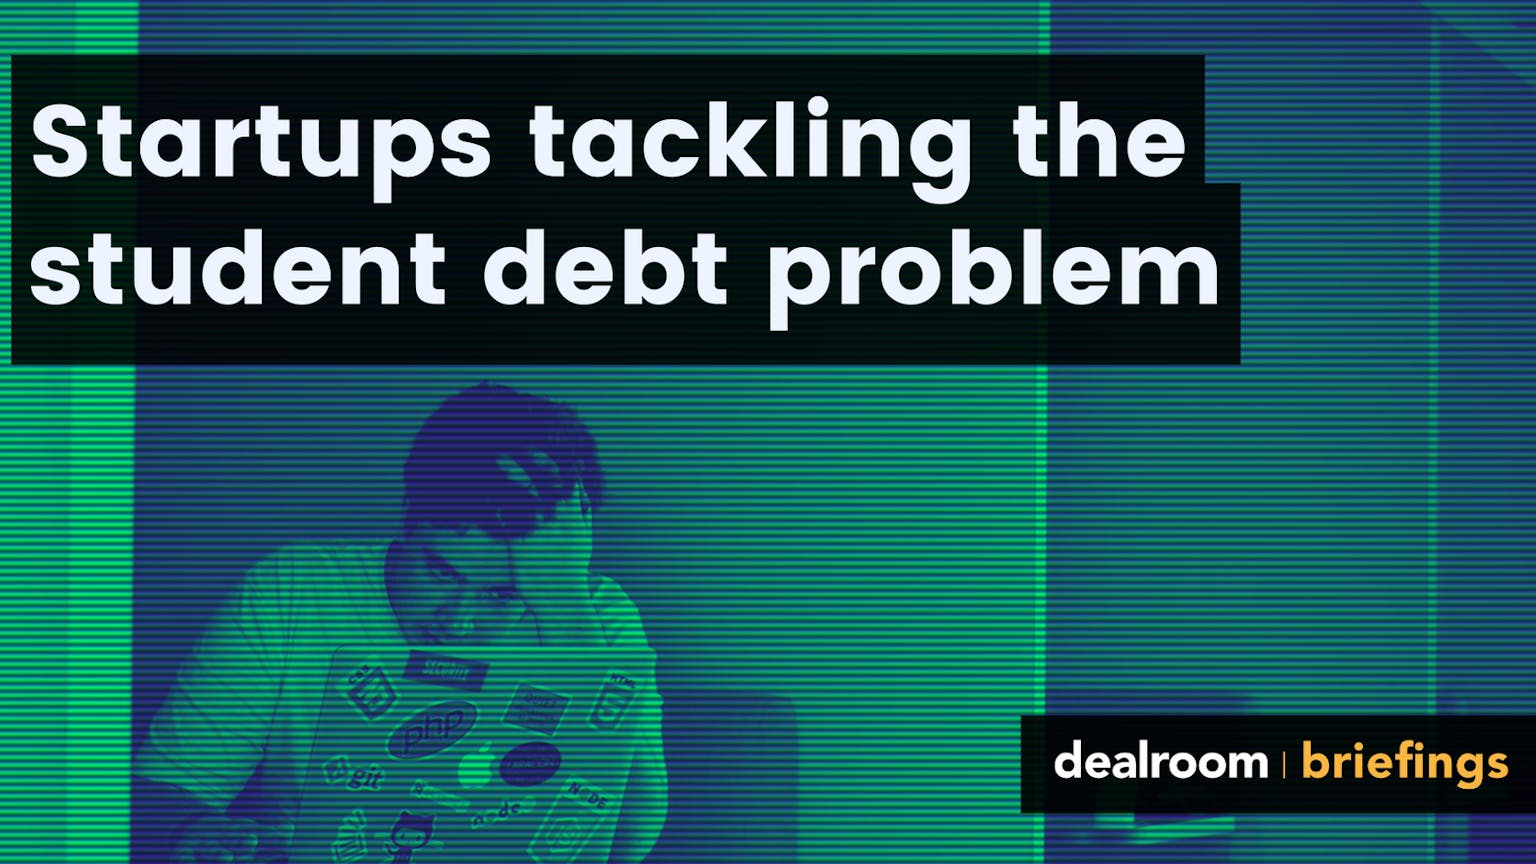 Startups tackling the student debt problem